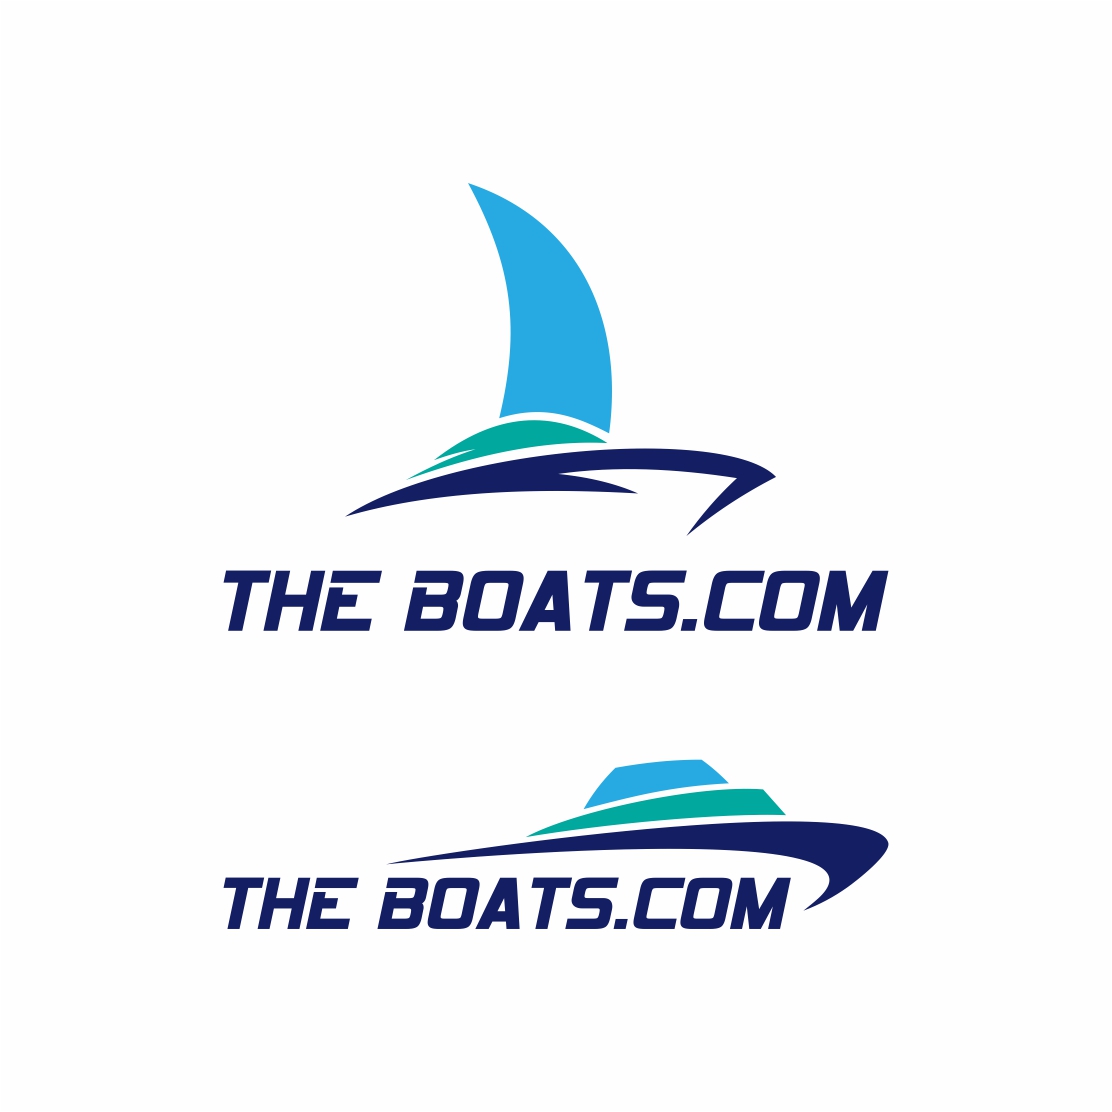 Boat Logo Design - only 5$ cover image.